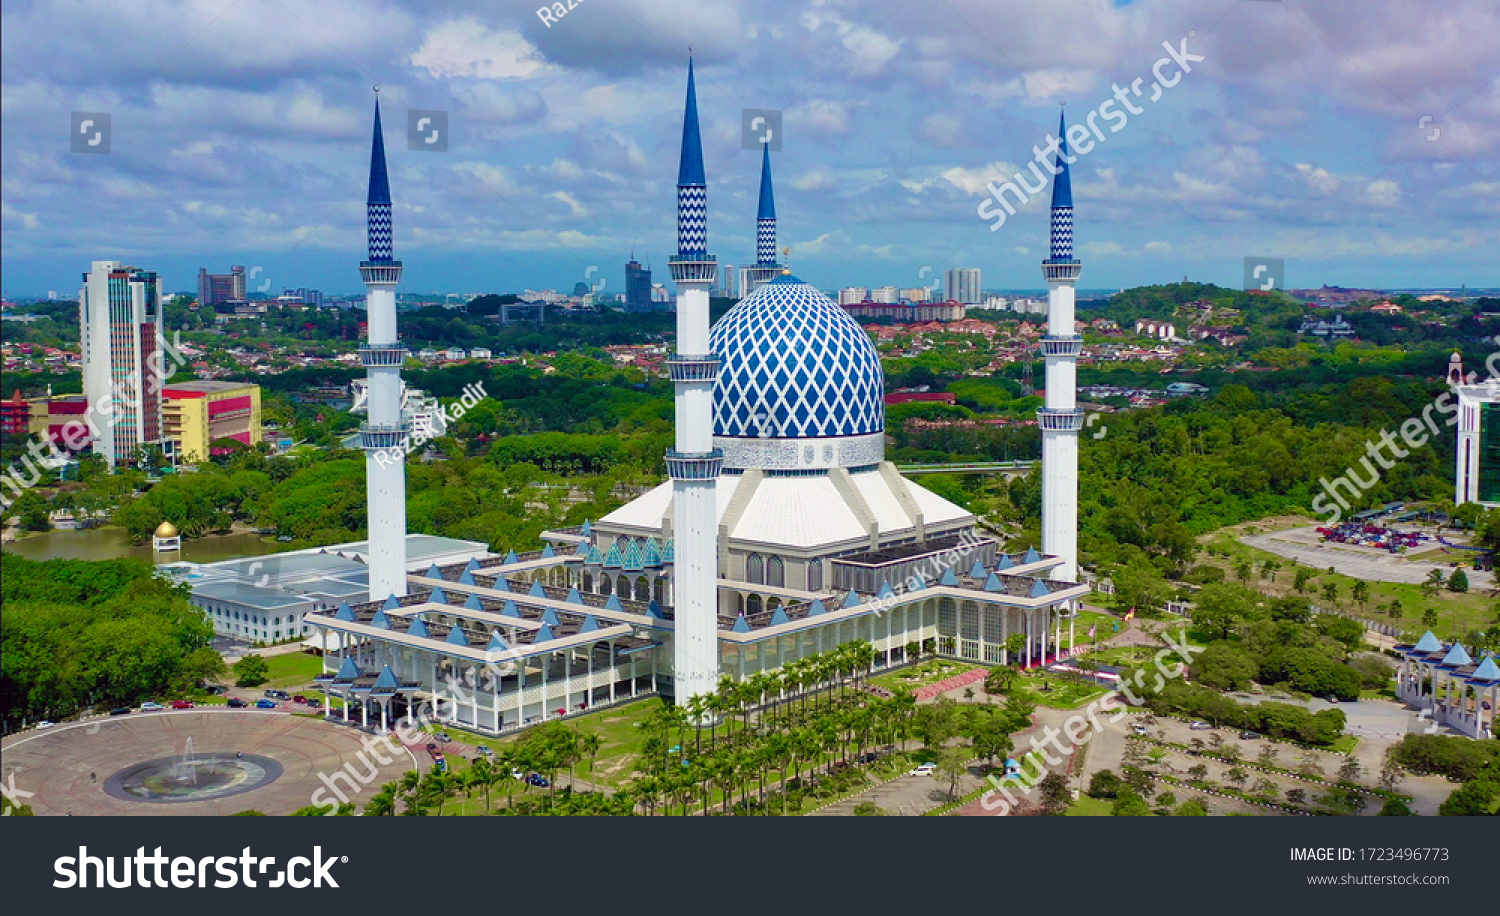 Sultan salahuddin abdul aziz mosque Images, Stock Photos & Vectors